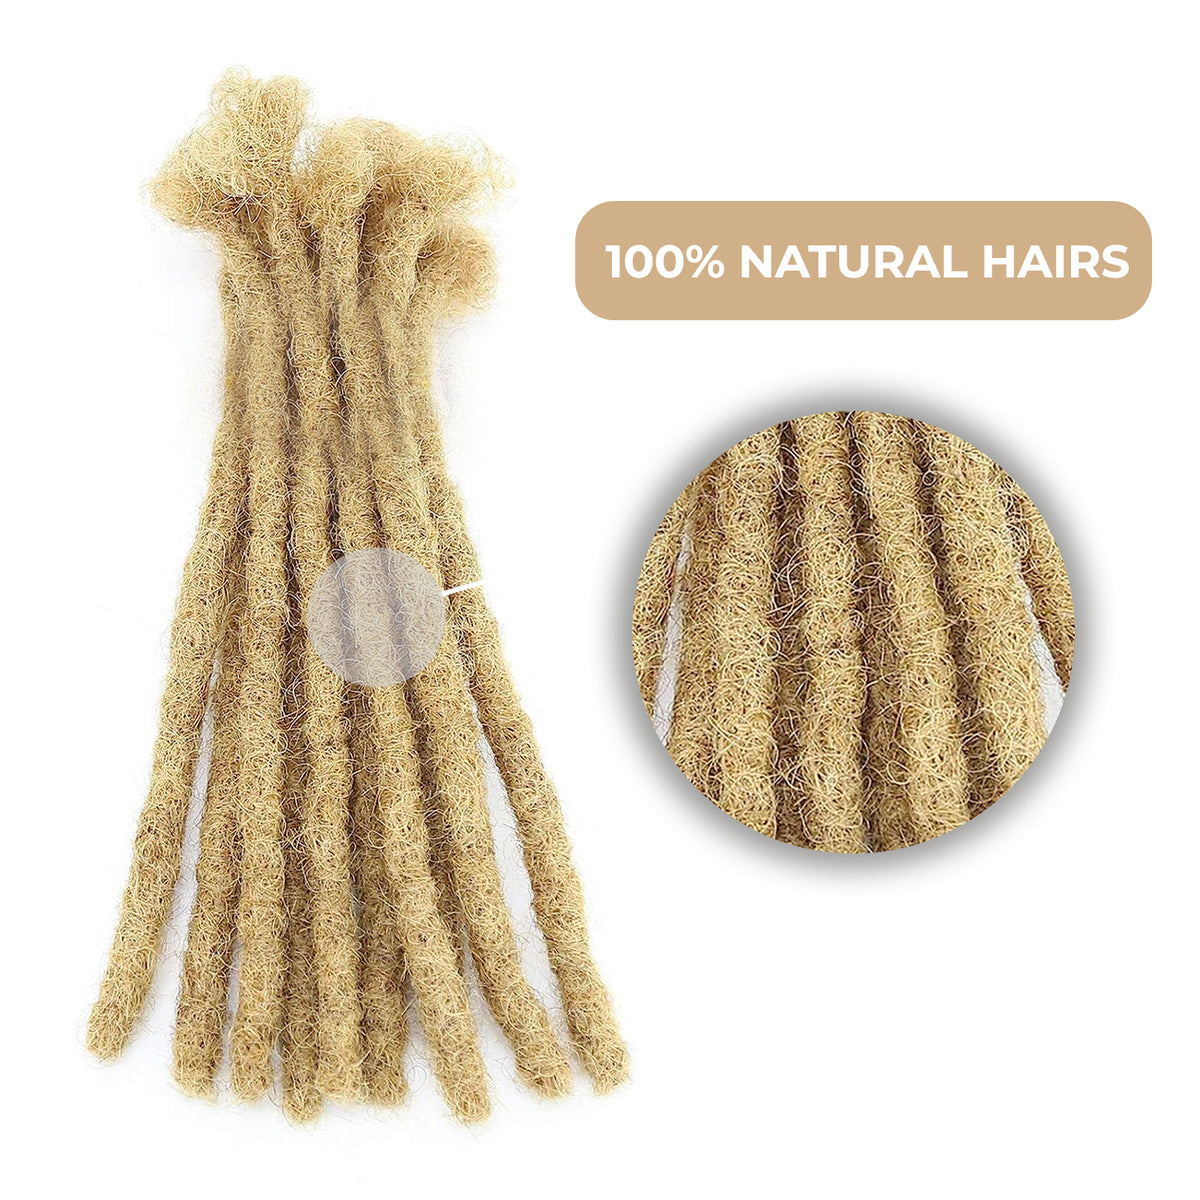 100% Human Hair Blonde Dreadlock Extensions 16Inch 10 Strands Handmade Natural Loc Extensions Human Hair Bundle Dreads Extensions For Woman & Men (27/Honey Blonde 16inch length 0.2cm Width)